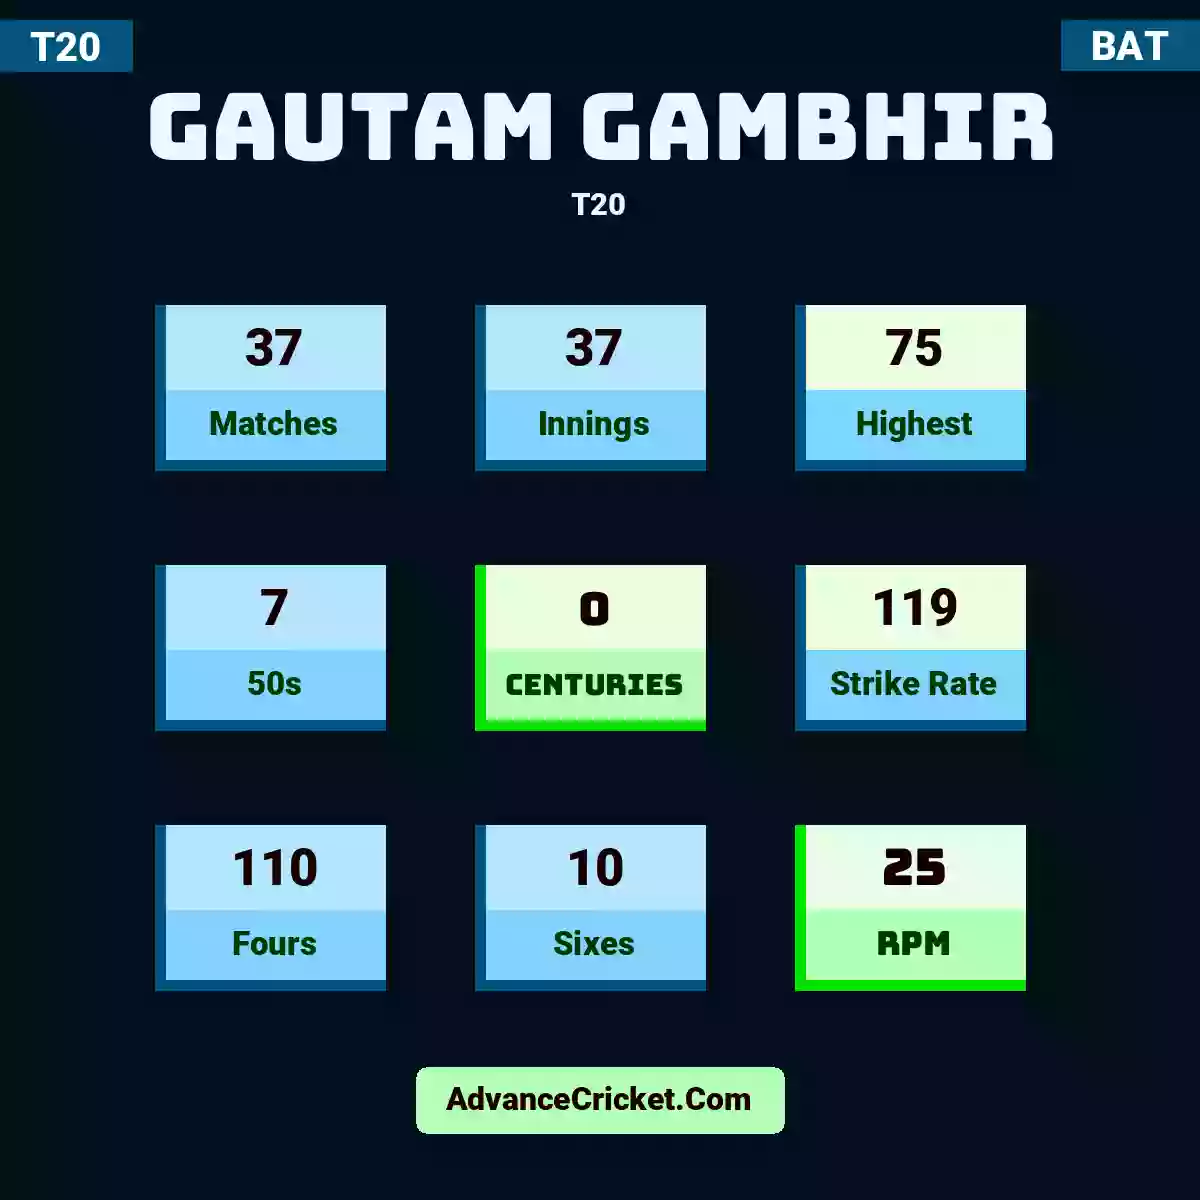 Gautam Gambhir T20 , Gautam Gambhir played 37 matches, scored 75 runs as highest, 7 half-centuries, and 0 centuries, with a strike rate of 119. G.Gambhir hit 110 fours and 10 sixes, with an RPM of 25.